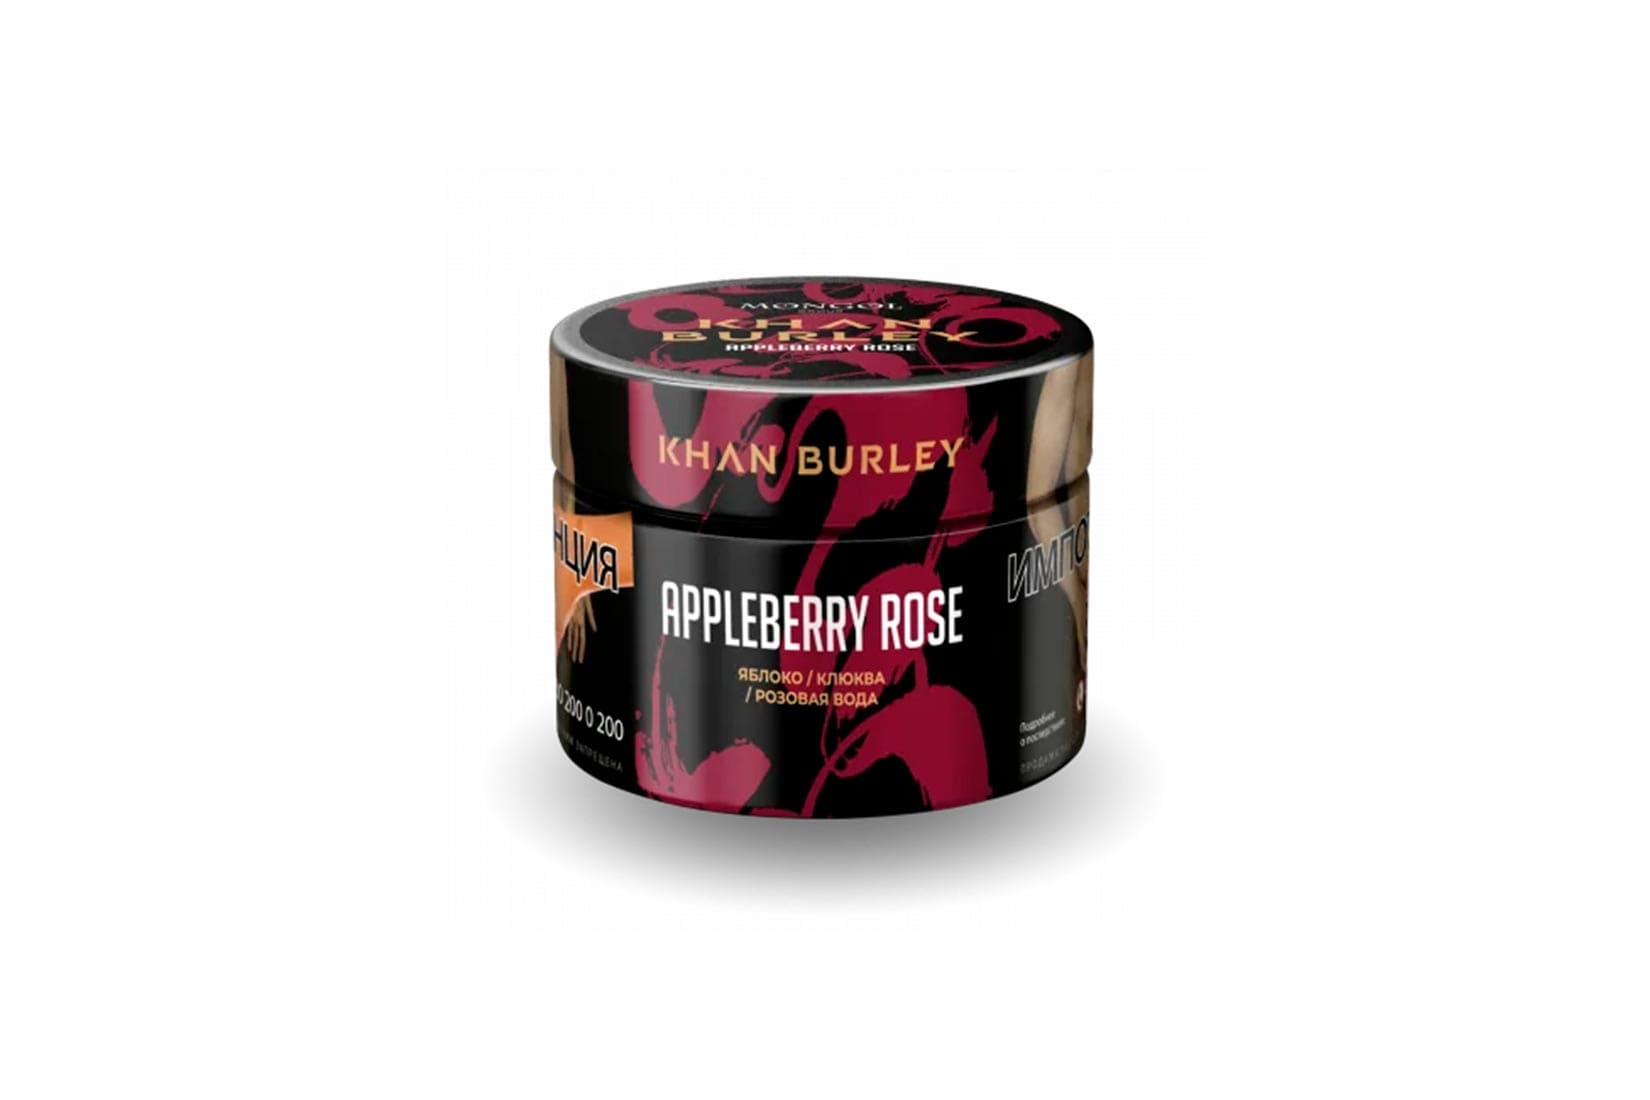 Табак для кальяна Khan Burley — Appleberry rose (Яблоко, клюква, розовая вода)